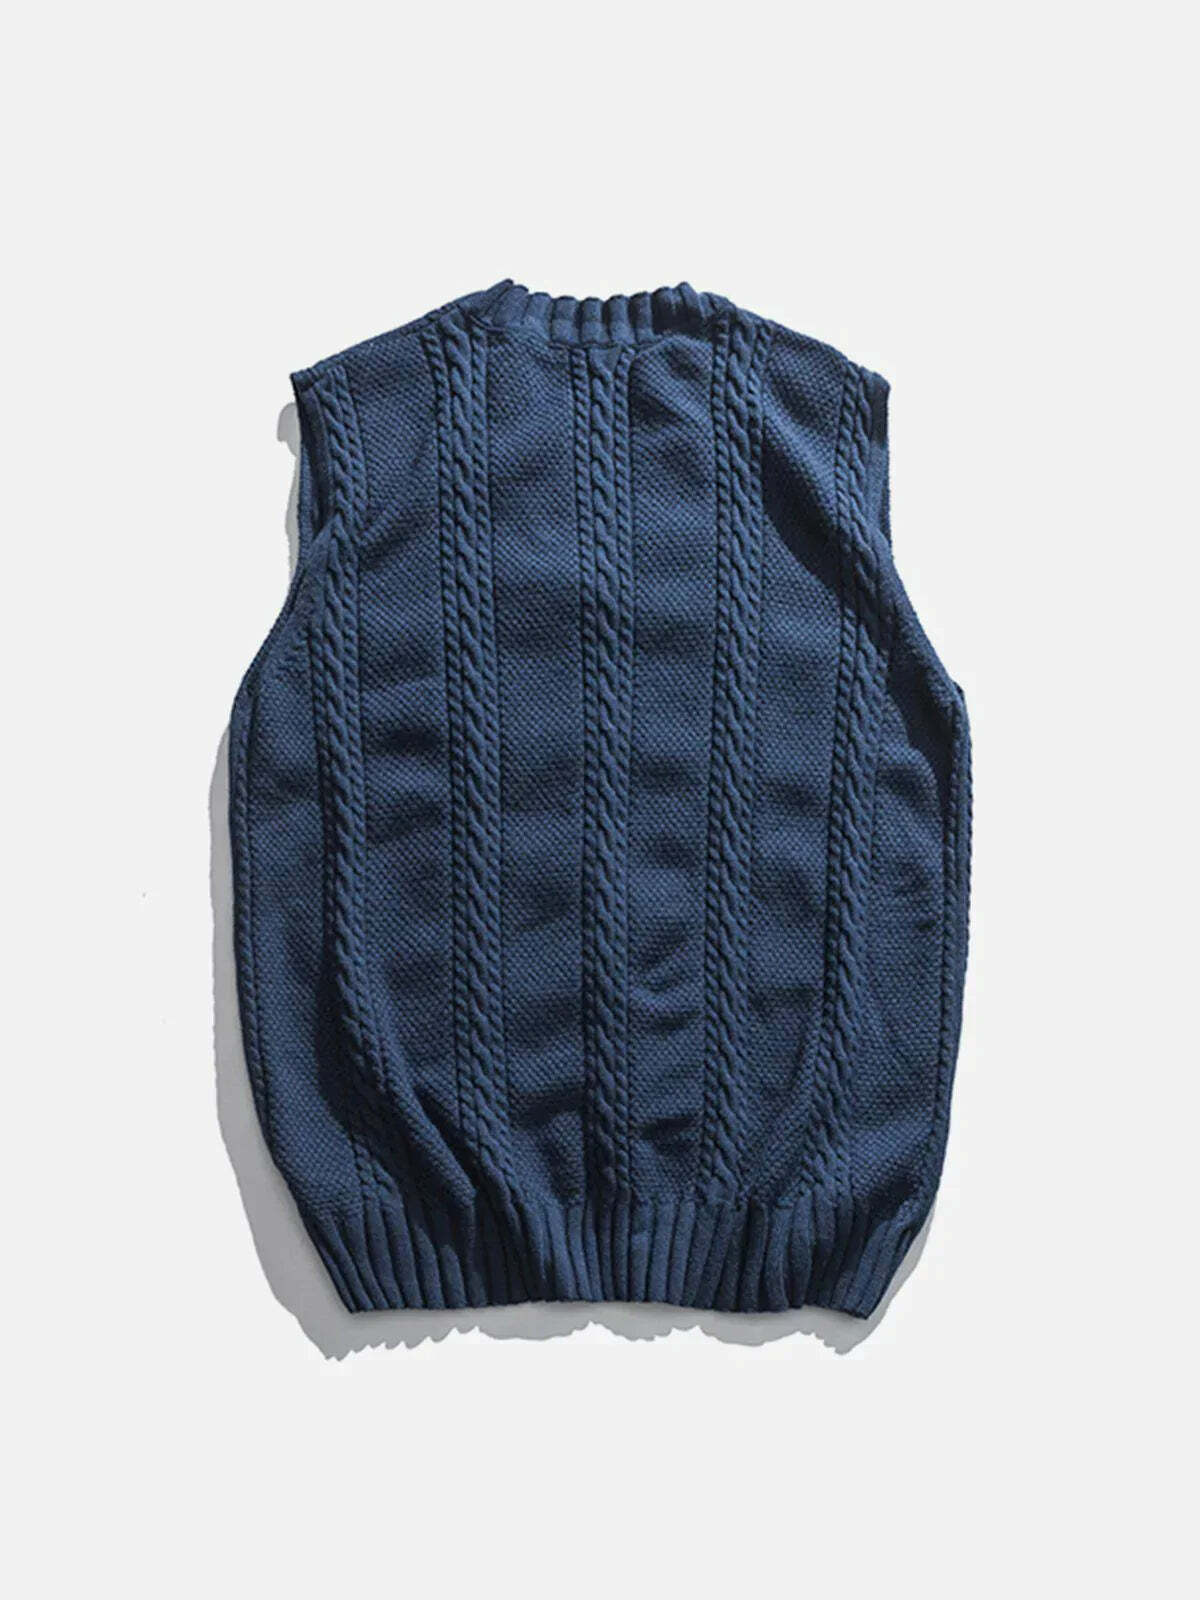 braided knit sweater vest edgy y2k fashion essential 6384